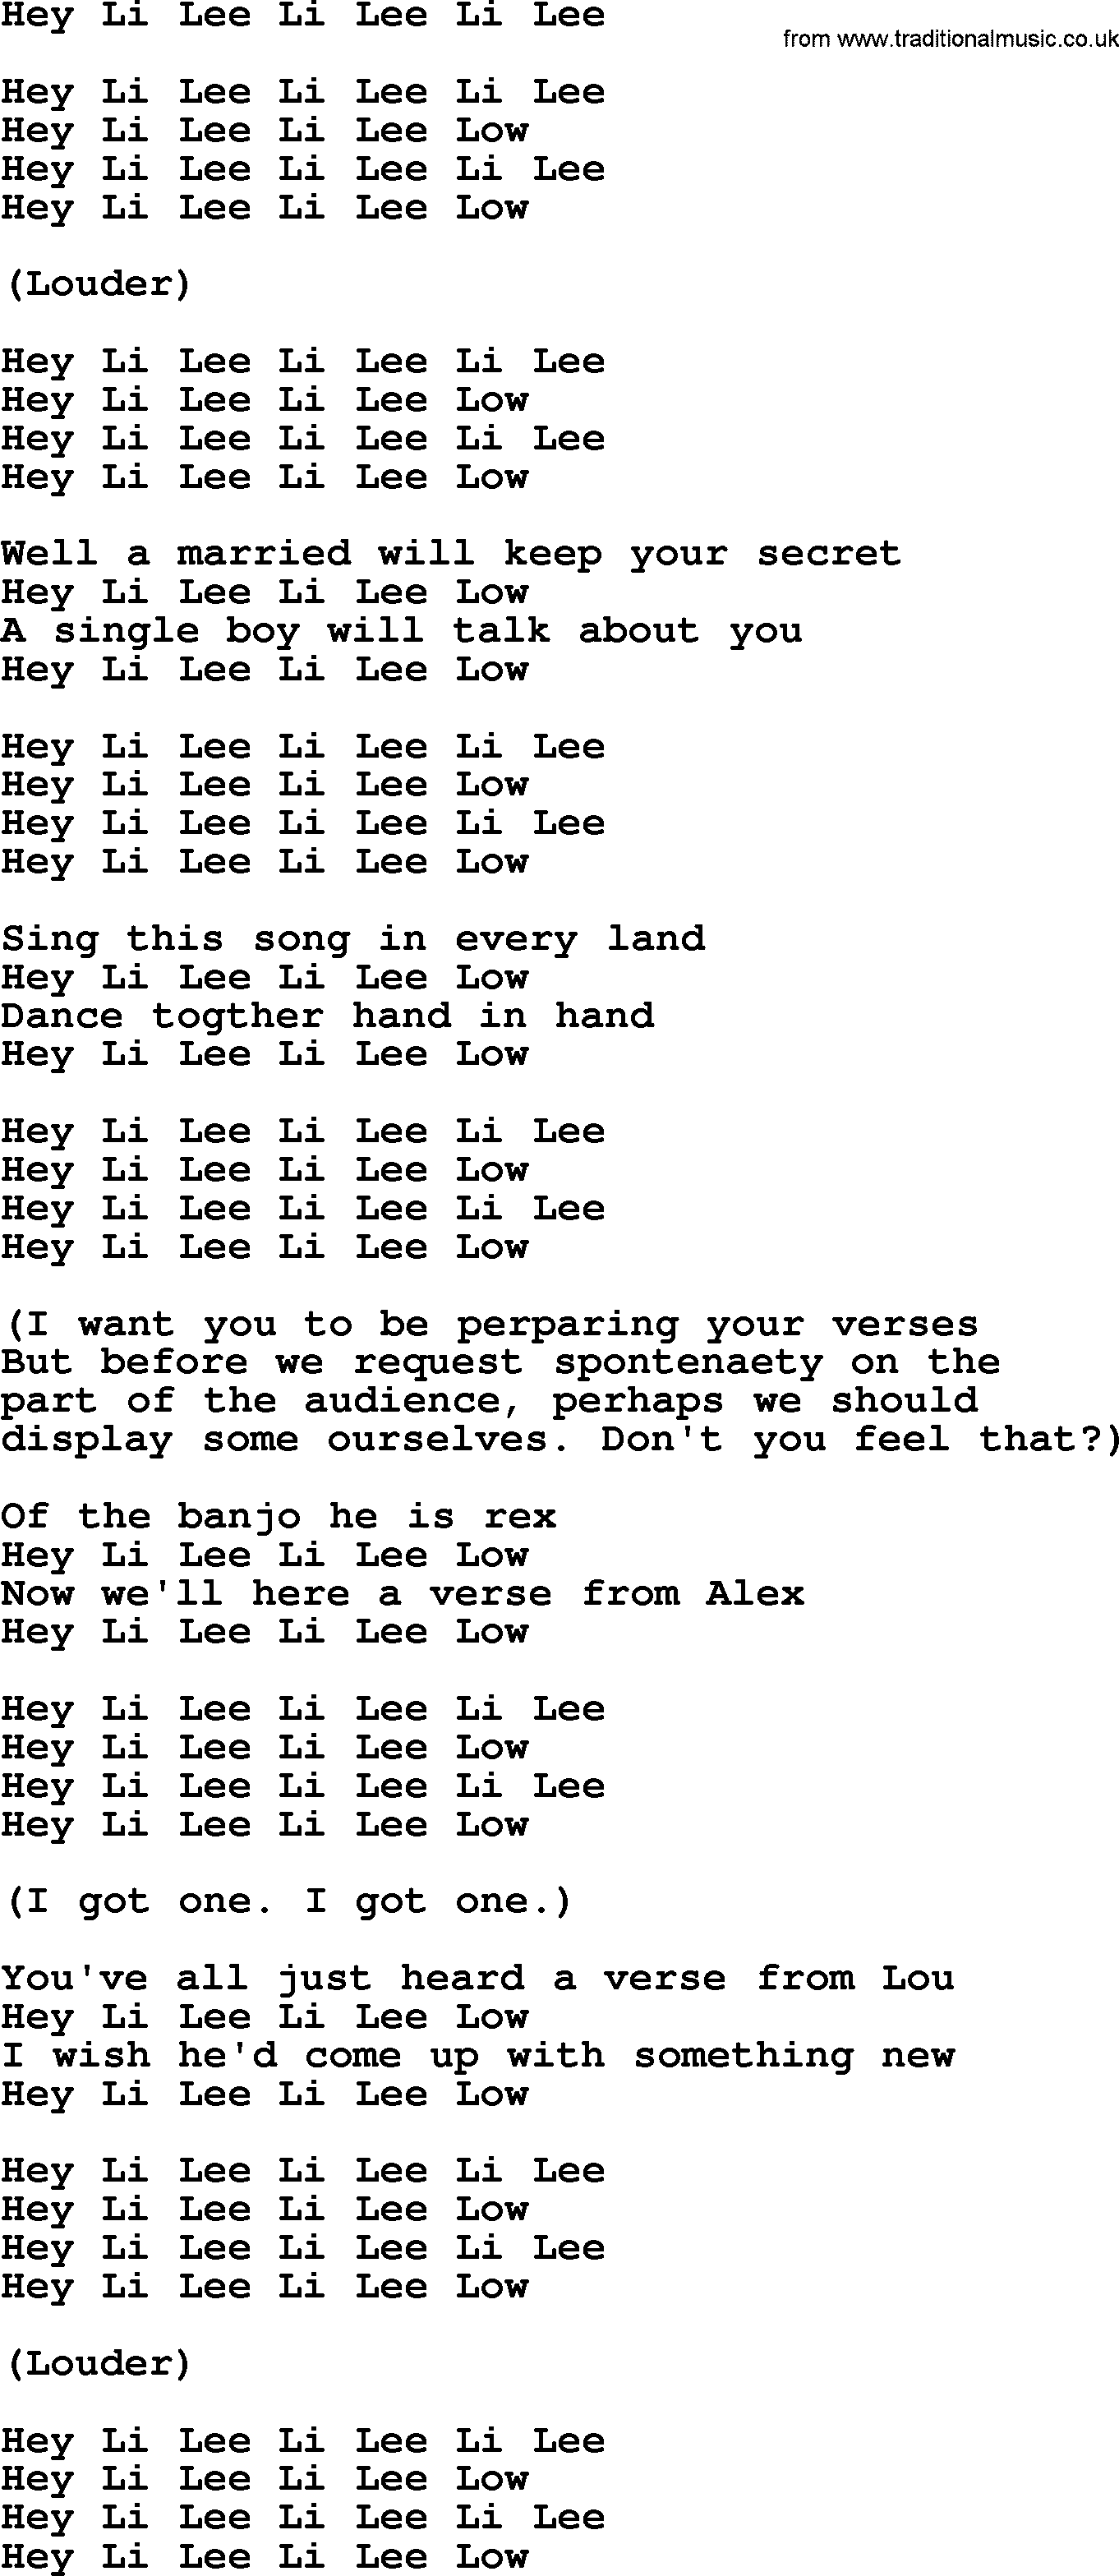 The Byrds song Hey Li Lee Li Lee Li Lee, lyrics